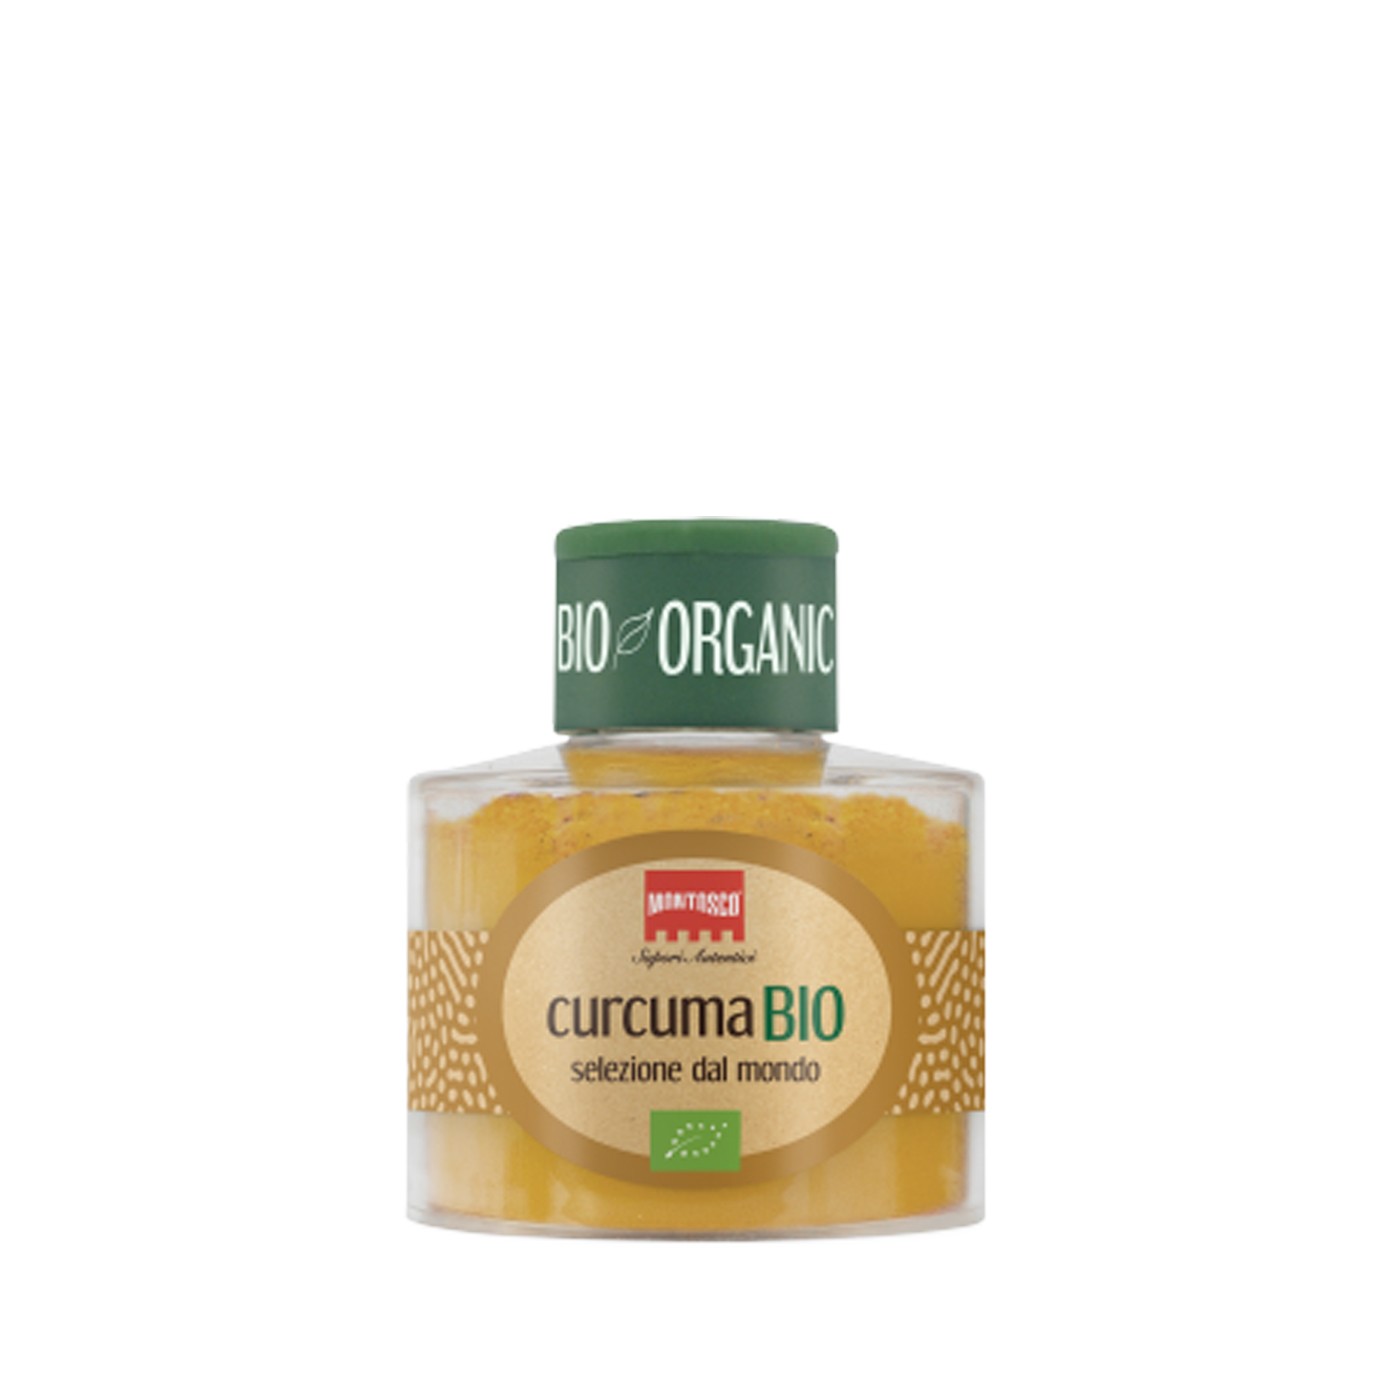 Organic Turmeric 1.51 oz - Montosco | Eataly.com | Eataly